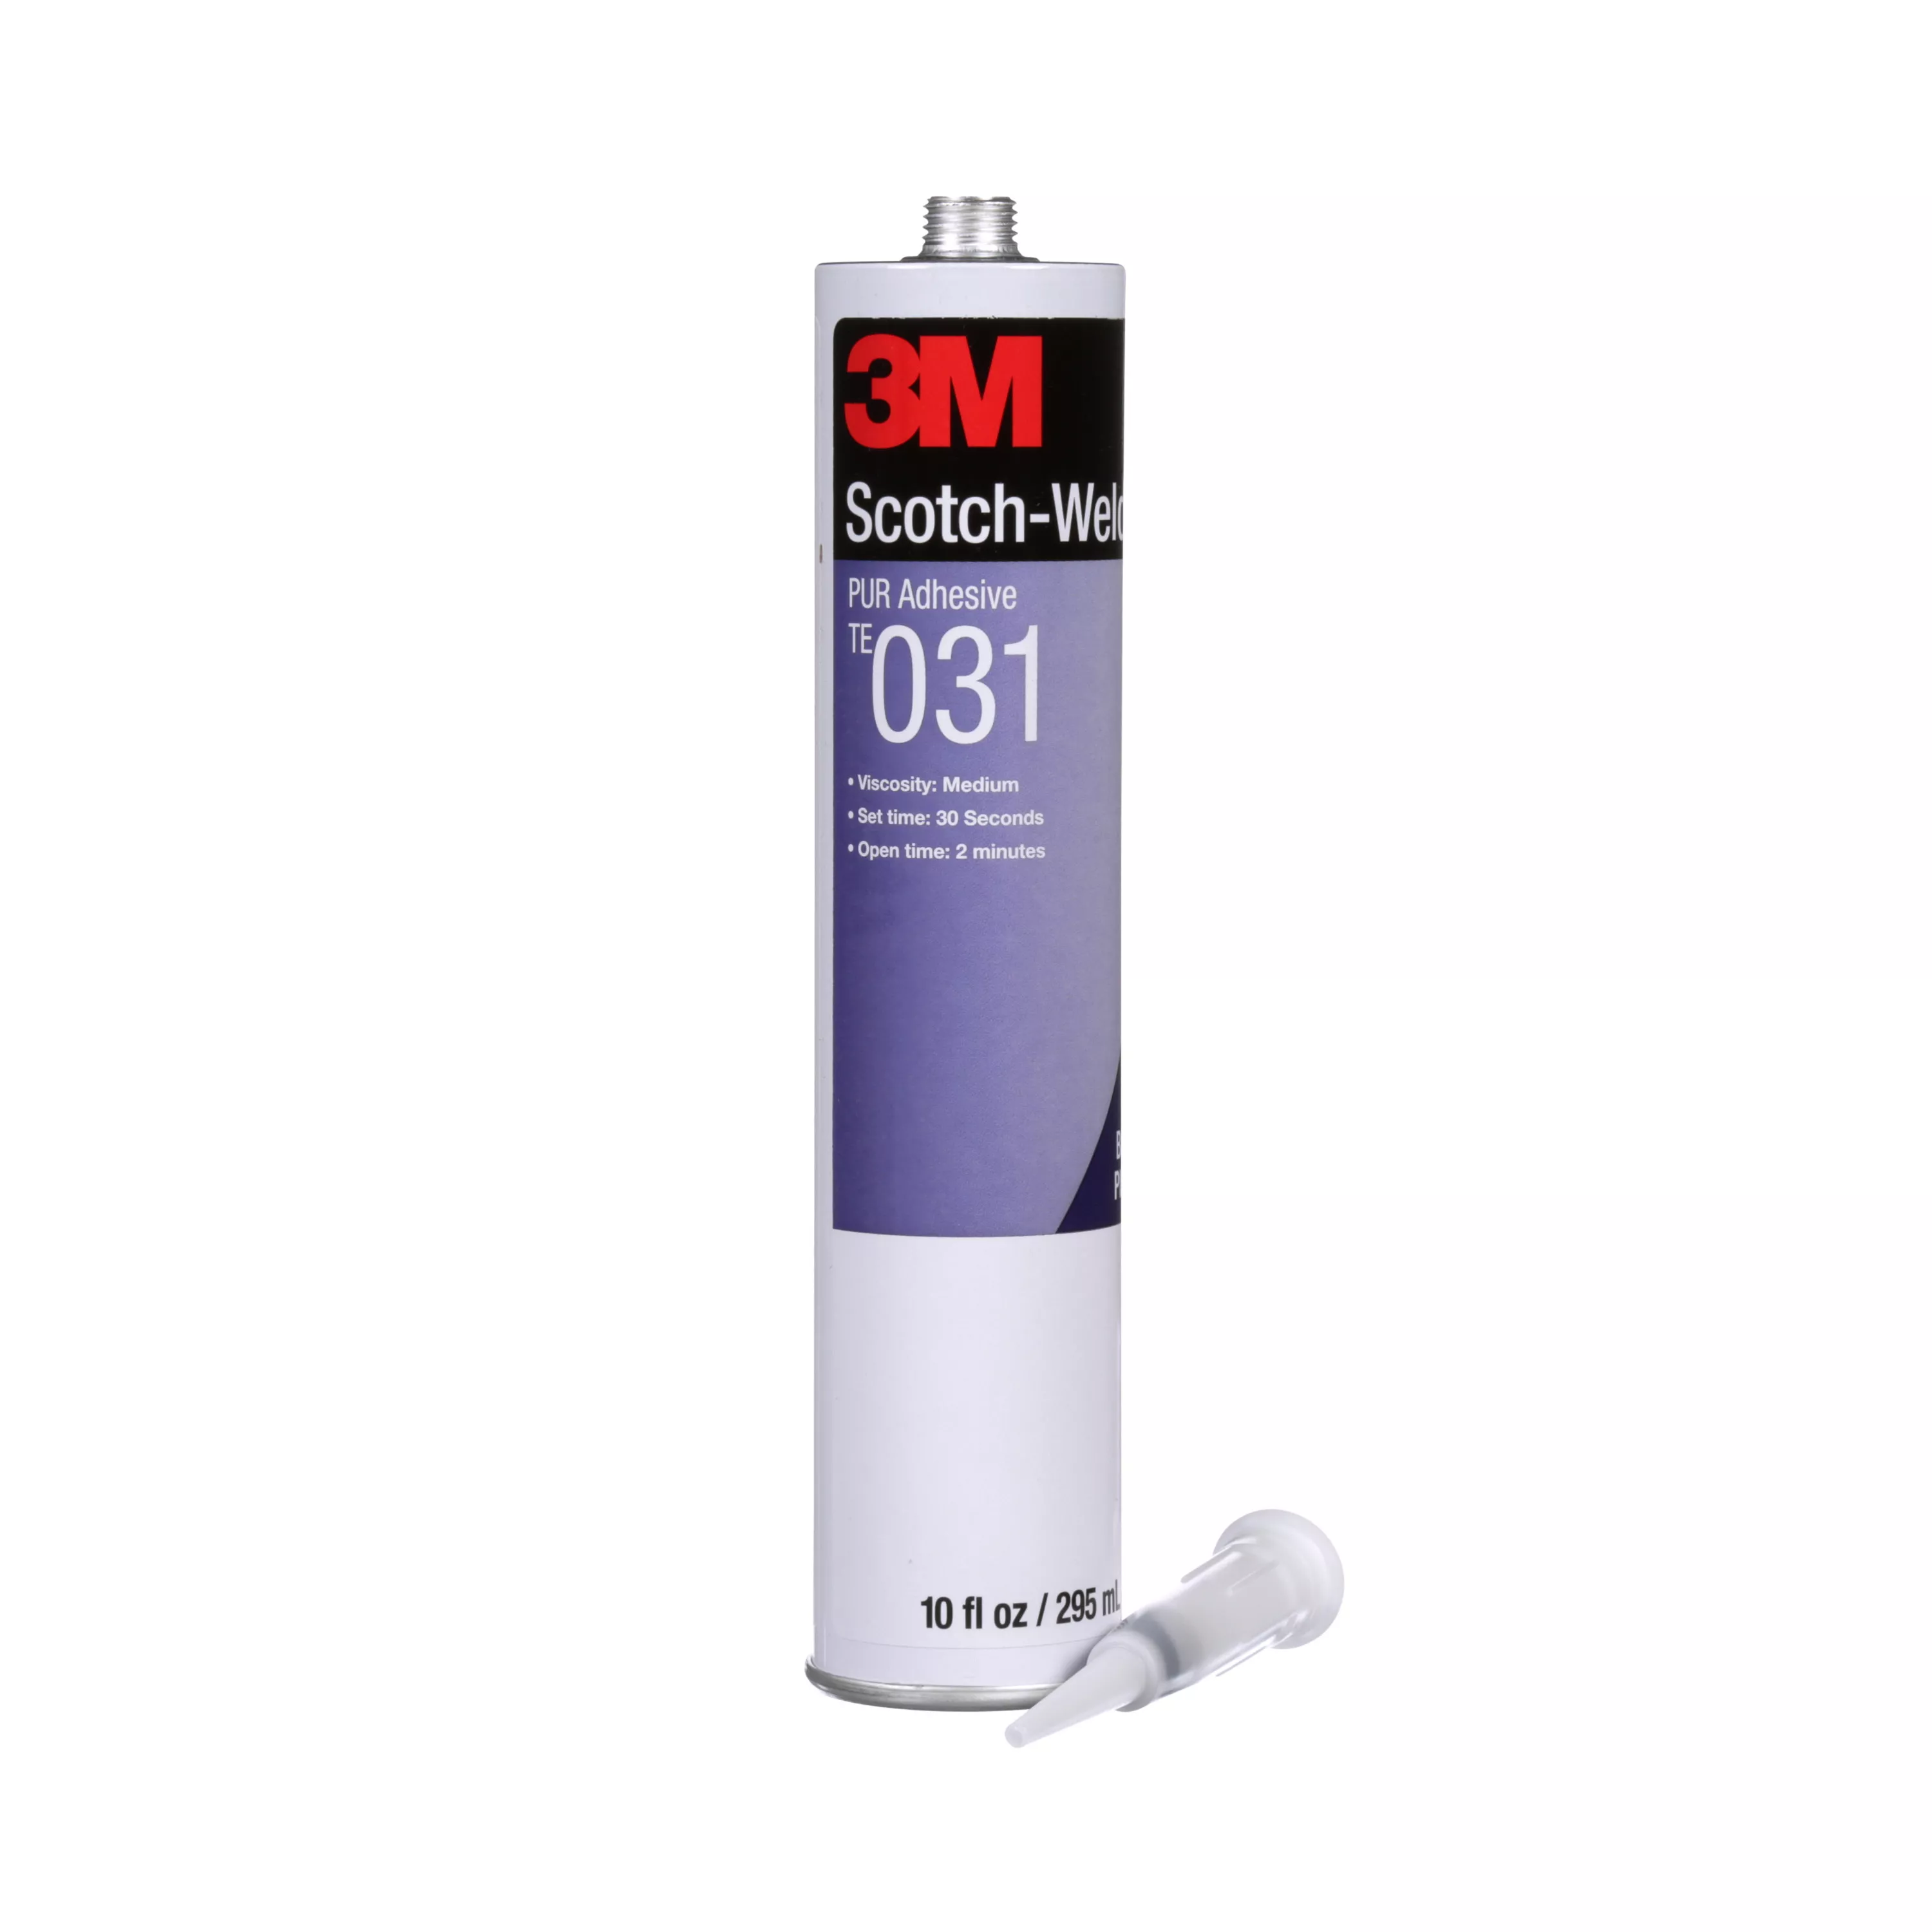 3M™ Scotch-Weld™ PUR Adhesive TE031, Off-White, 1/10 Gallon Cartidge, 5
Canister/Case